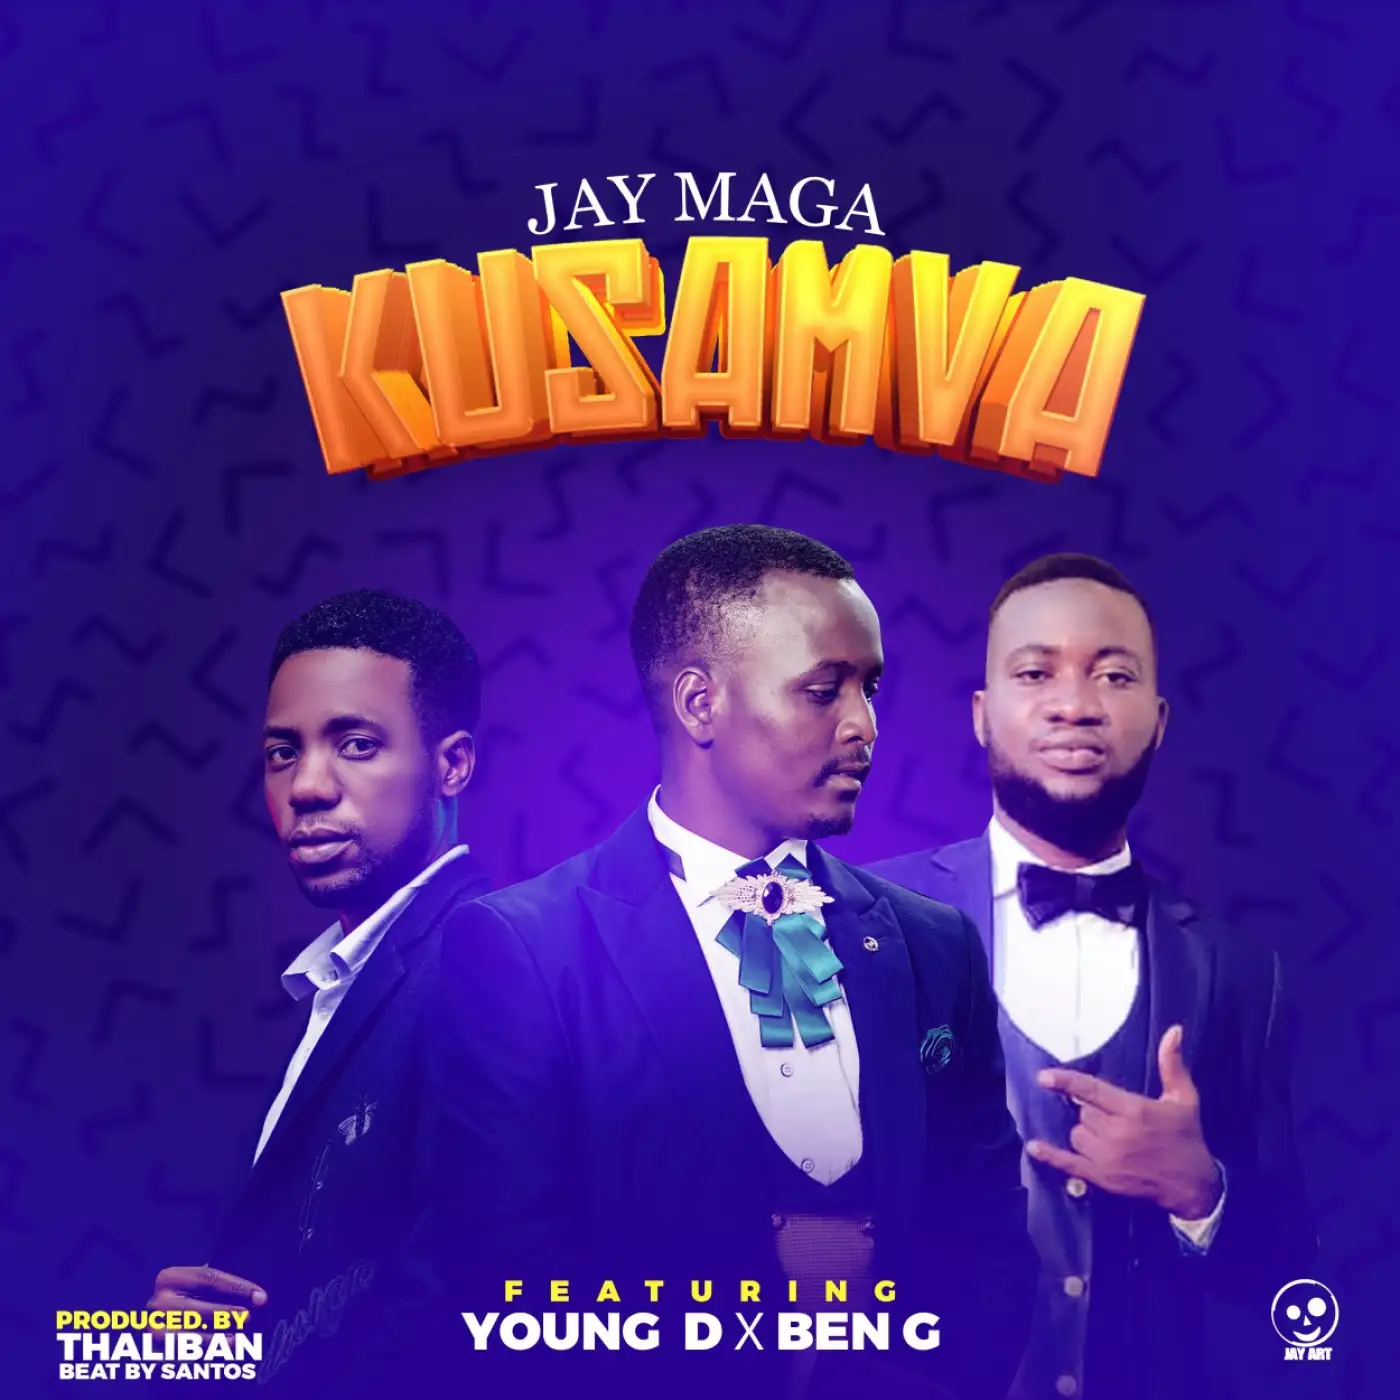 jay-maga-kusamva-ft-young-d-and-ben-g-mp3-download-mp3 download